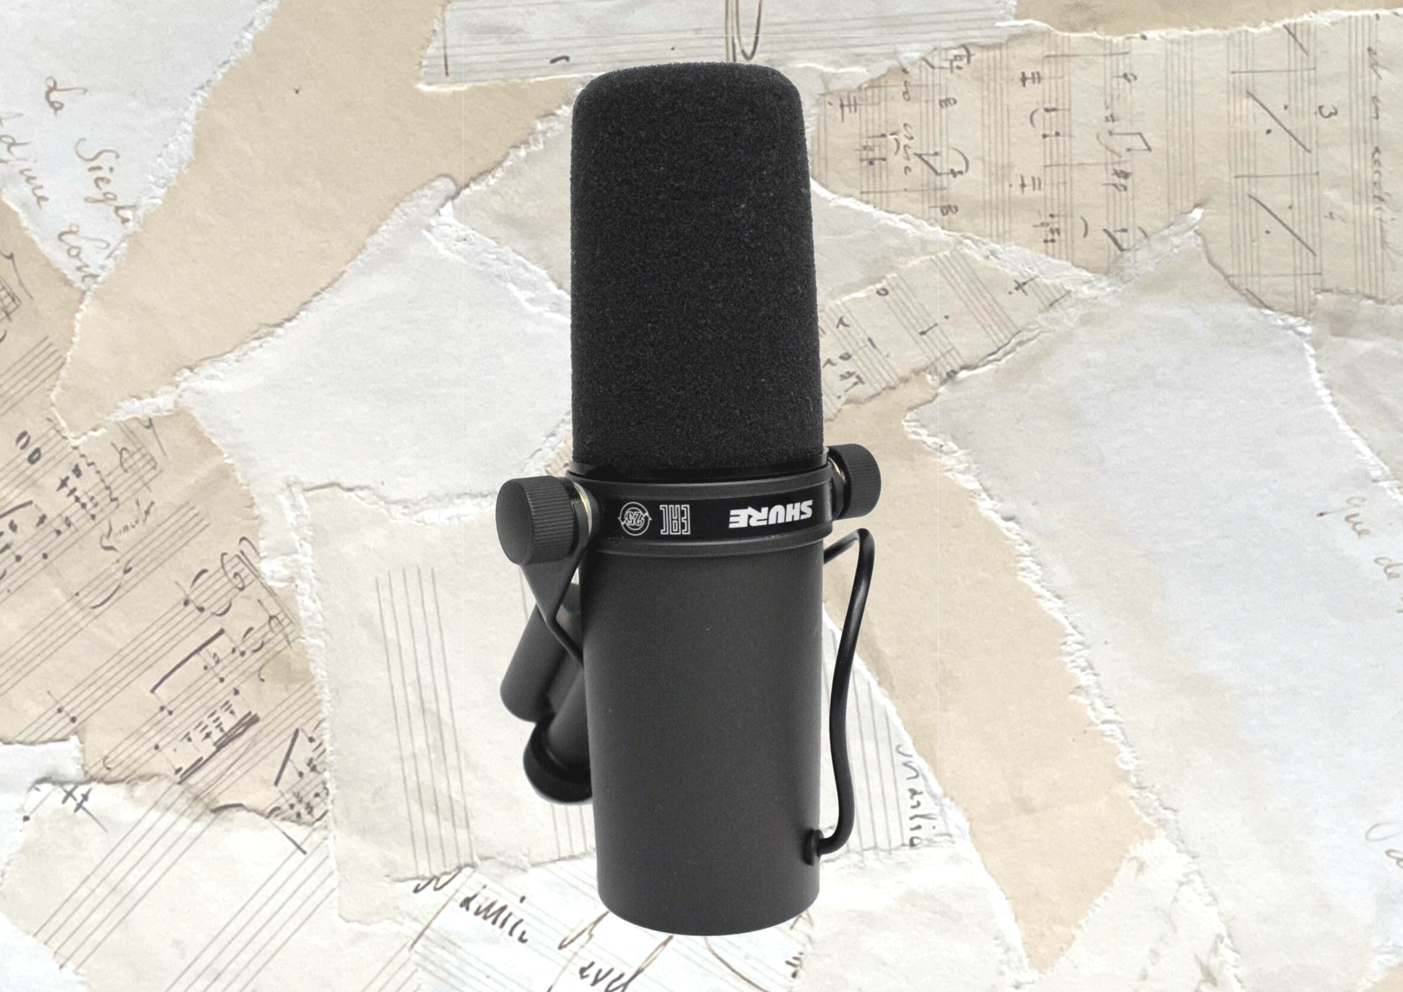 SM7B Microphone podcast / radio Shure